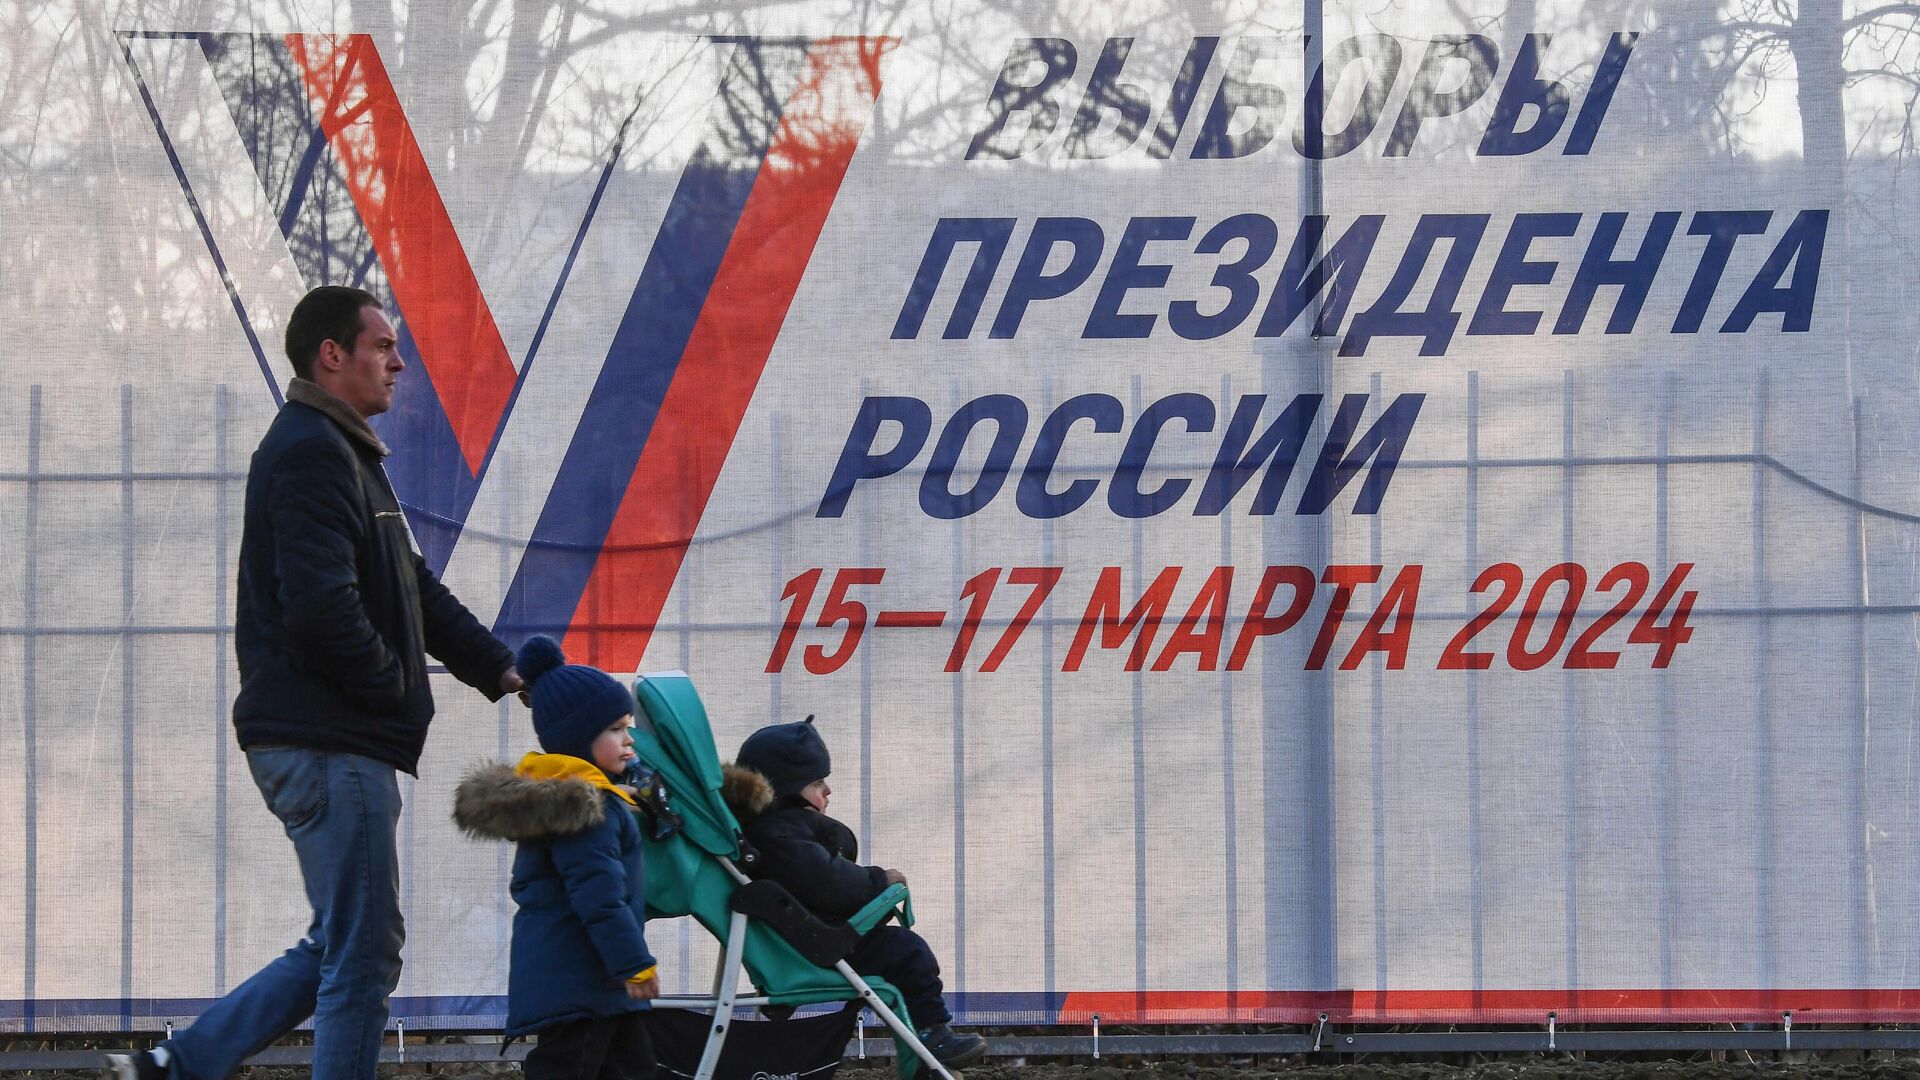 "Партия дела" проведет 10 февраля съезд в поддержку Путина на выборах президента